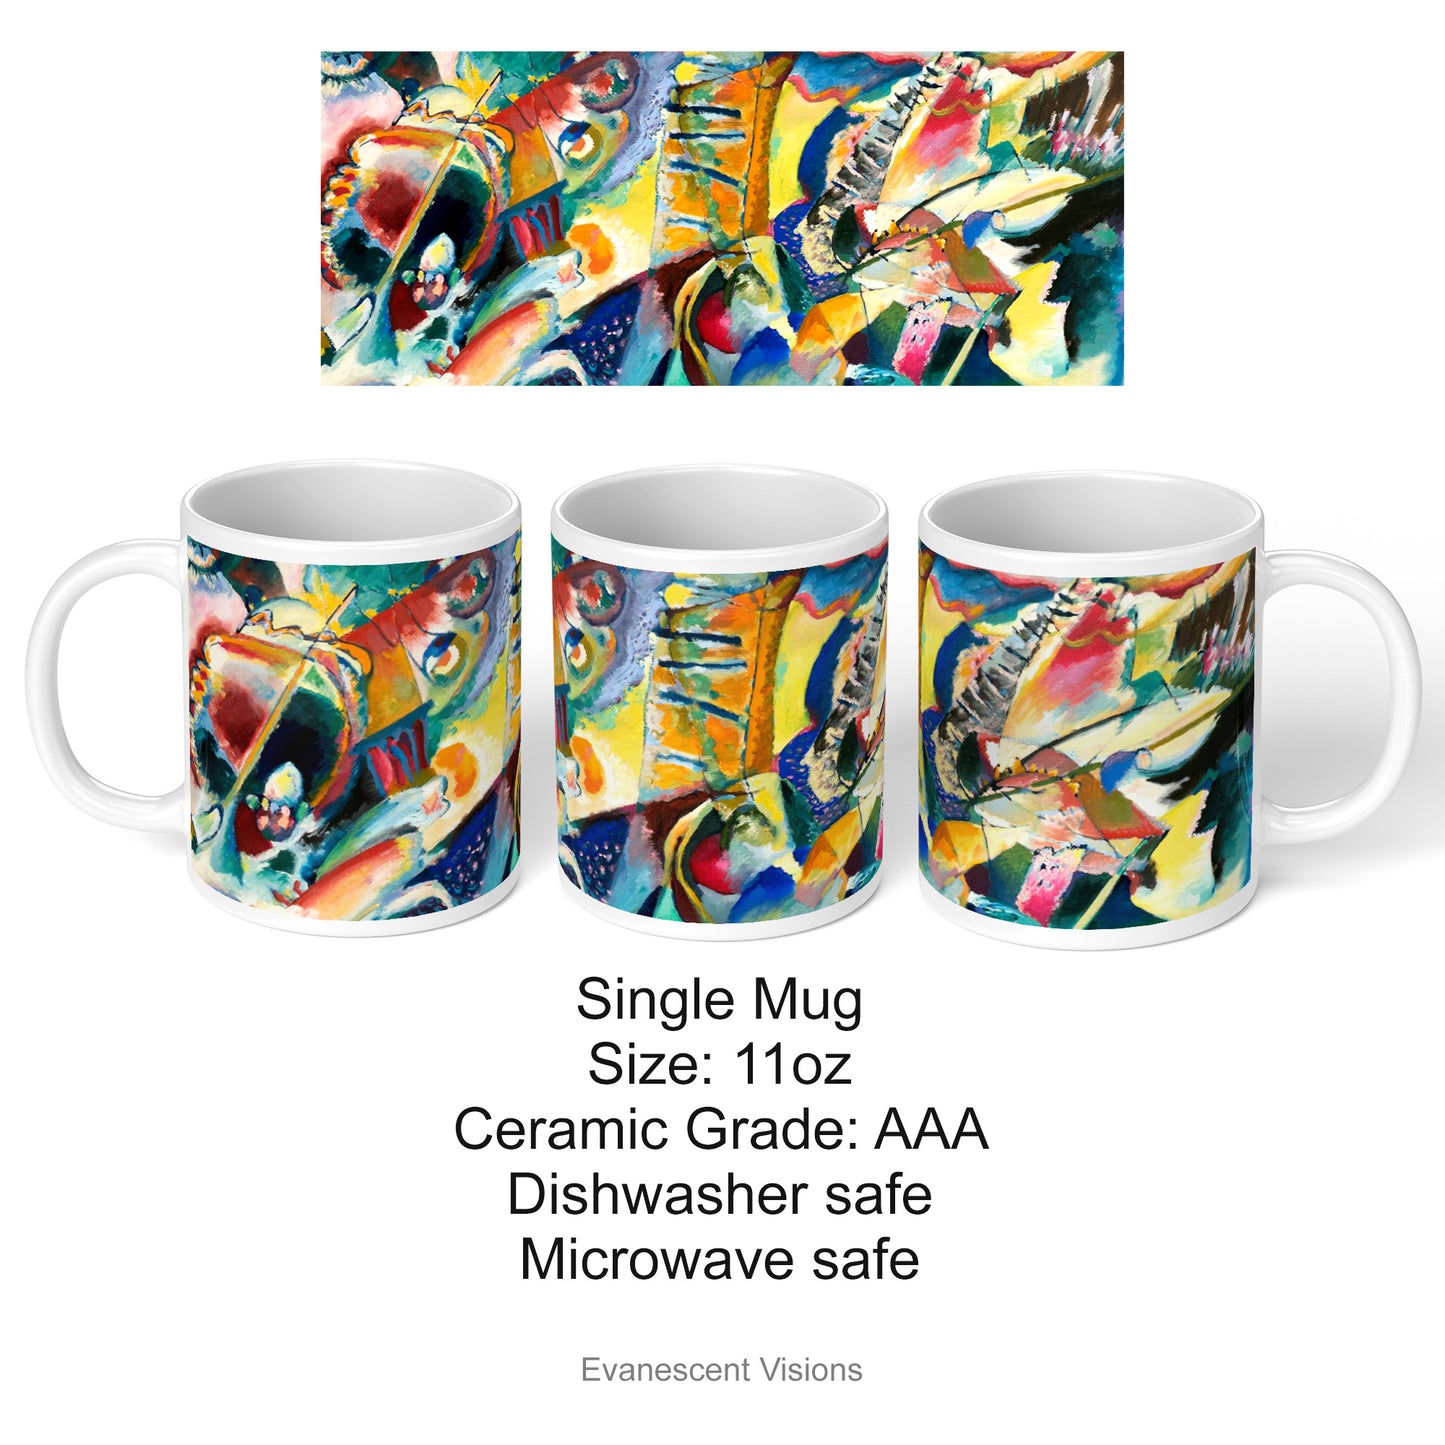 Kandinsky Abstract Art Mugs product details